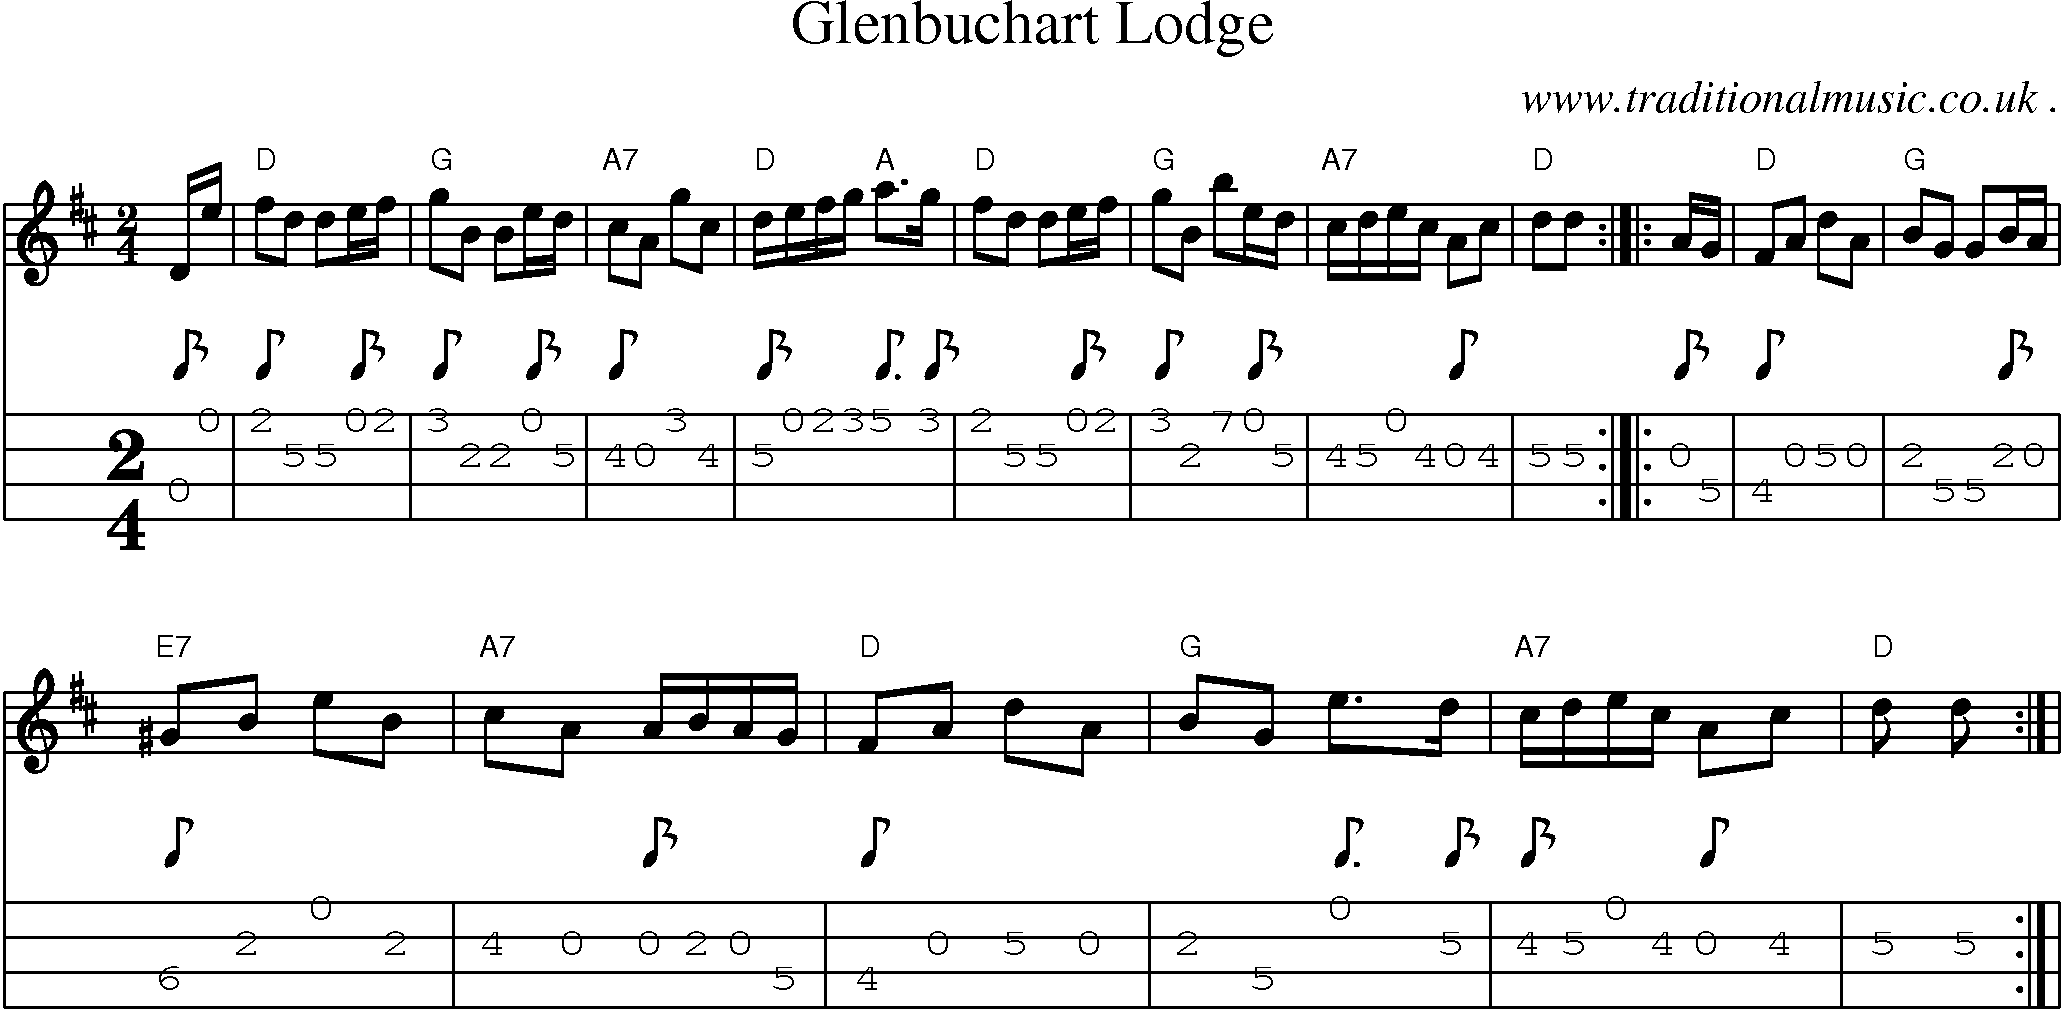 Sheet-music  score, Chords and Mandolin Tabs for Glenbuchart Lodge